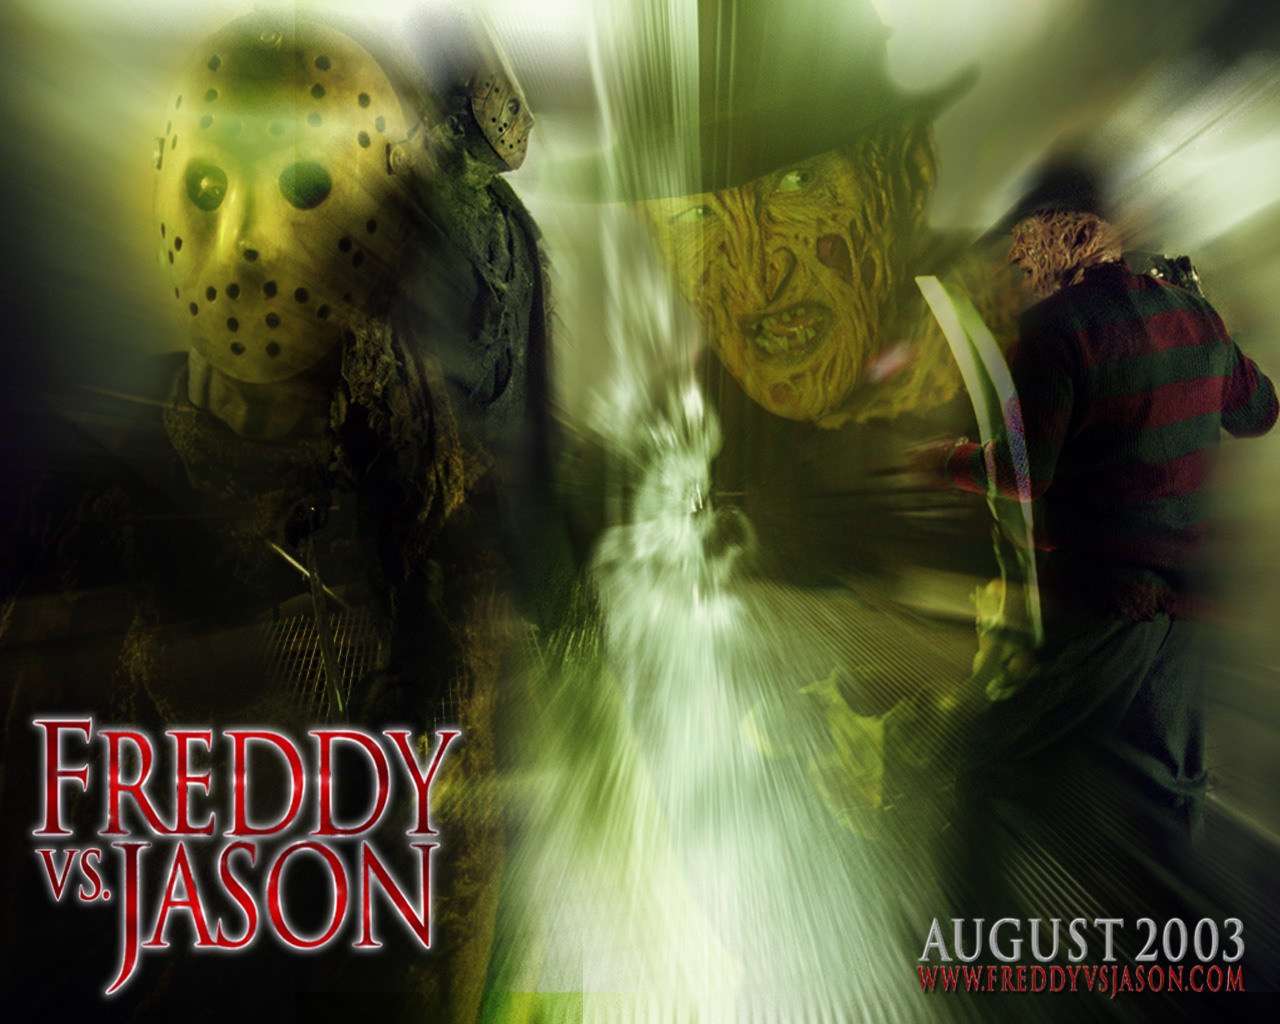 Freddy vs Jason - Friday the 13th Wallpaper (30351432) - Fanpop